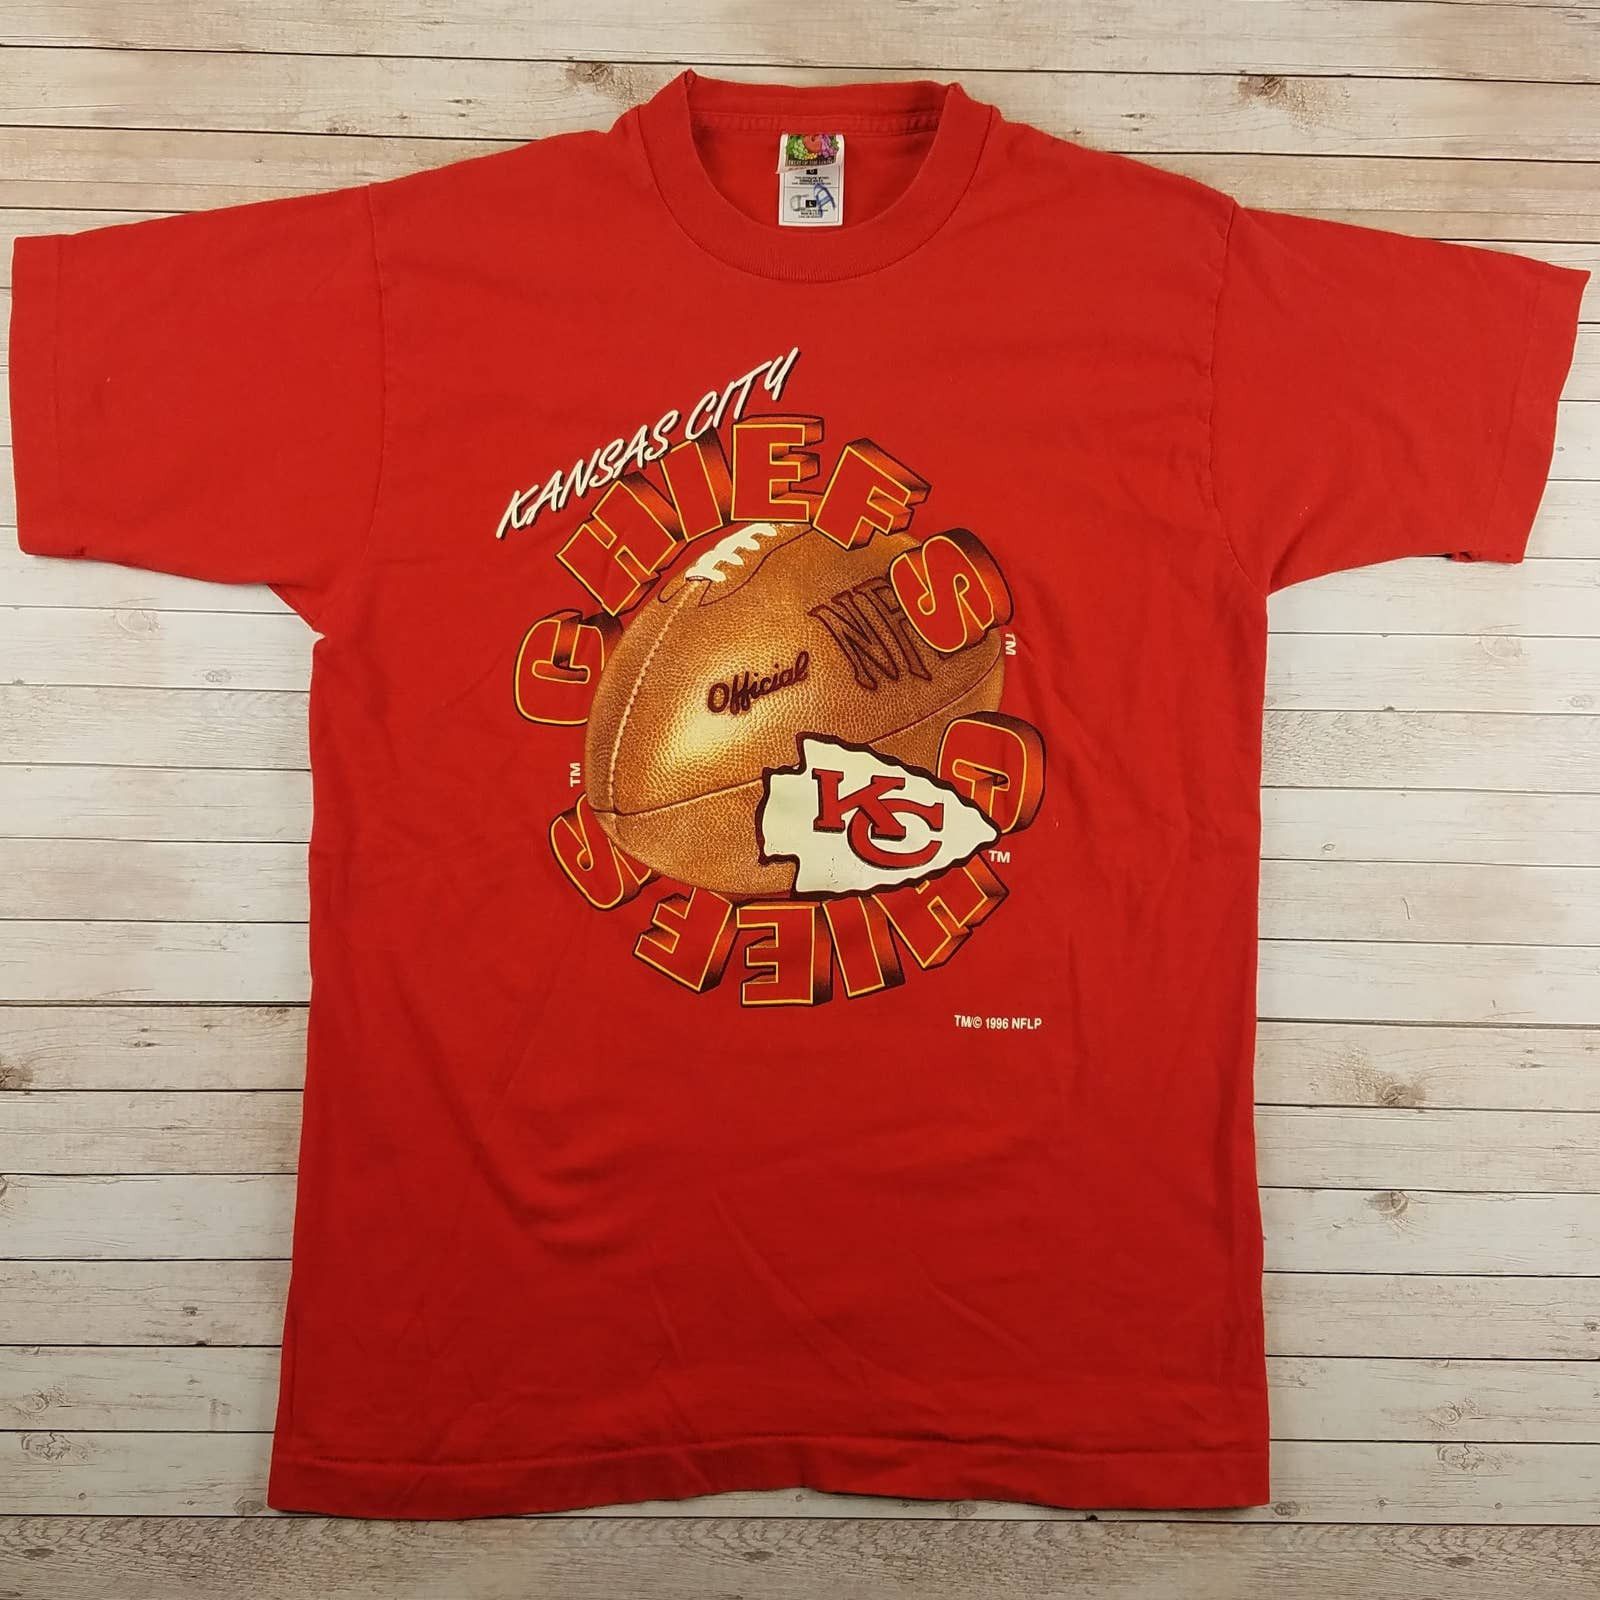 Vintage VTG 90s Kansas City Chiefs NFL Superbowl Champions Tee Shirt ...